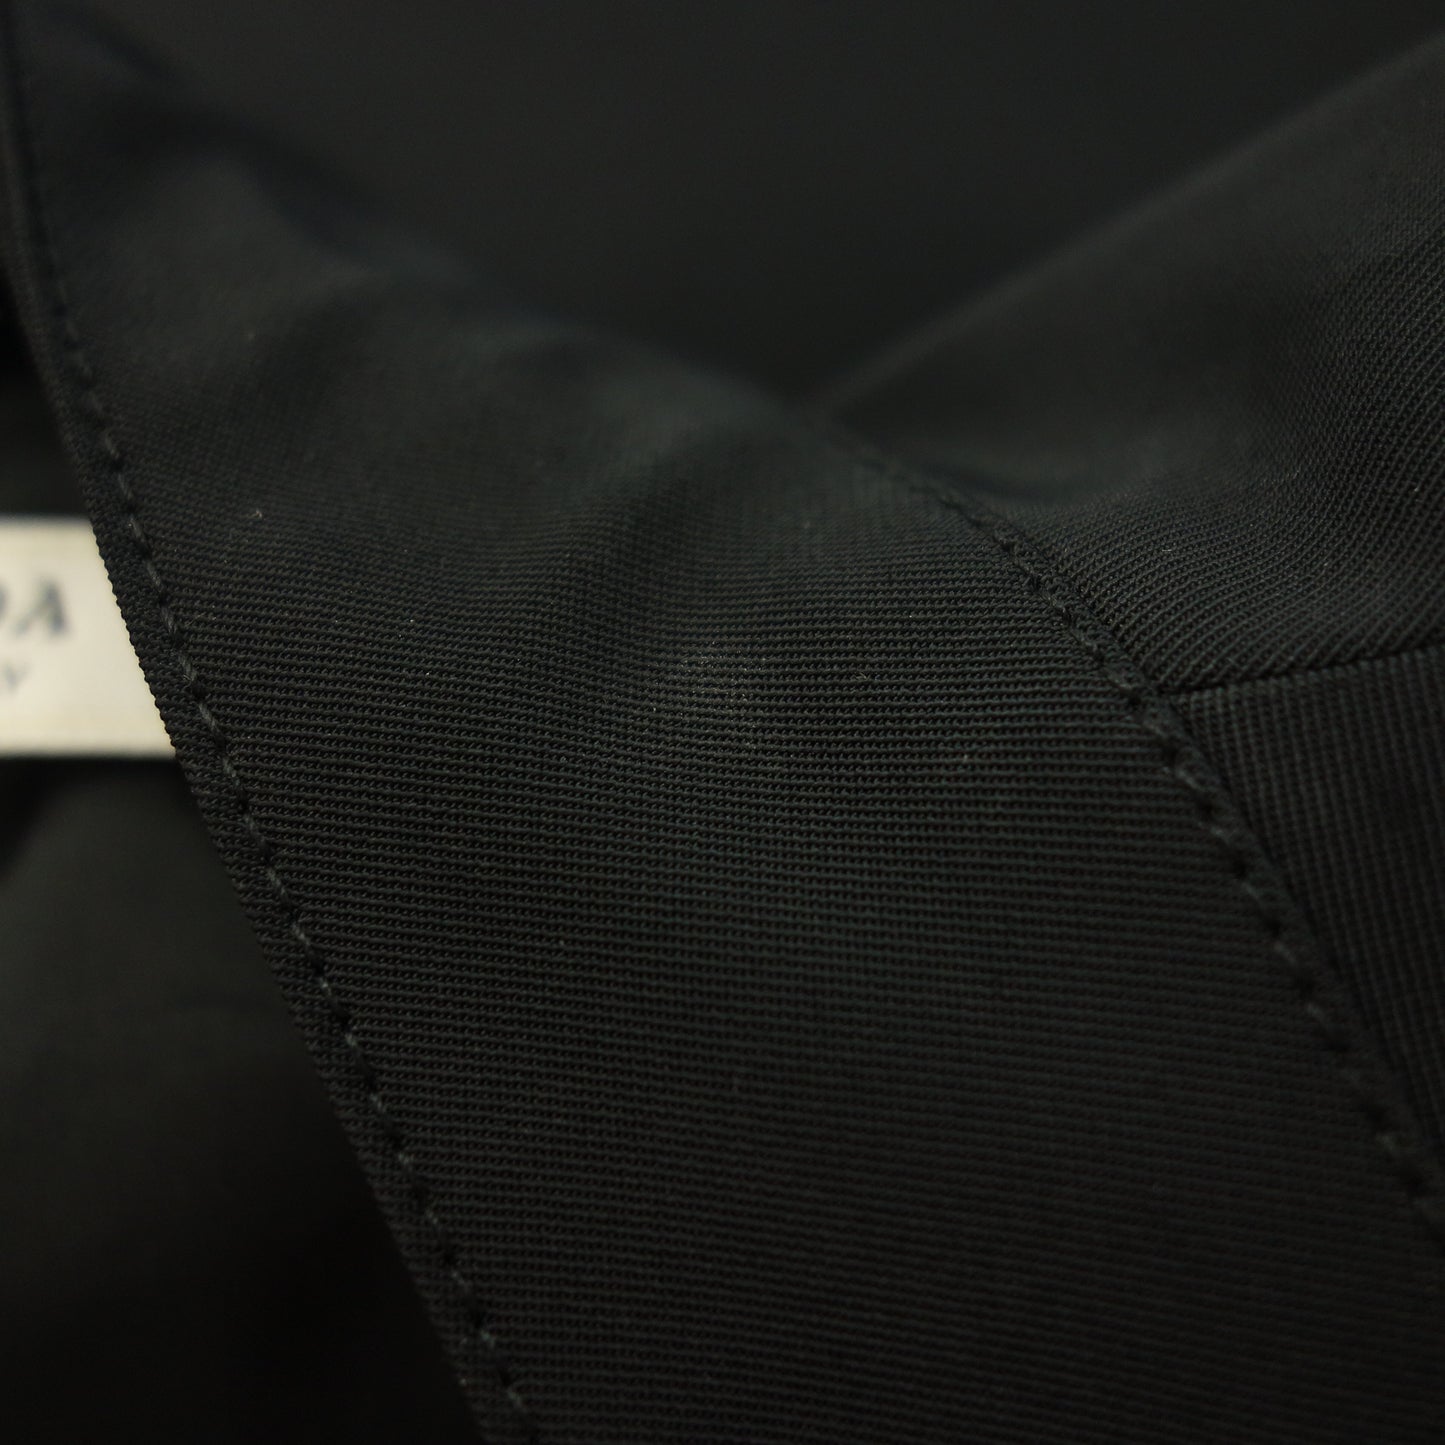 Good condition◆Prada jacket zip up stretch material black size L men's PRADA [AFB43] 